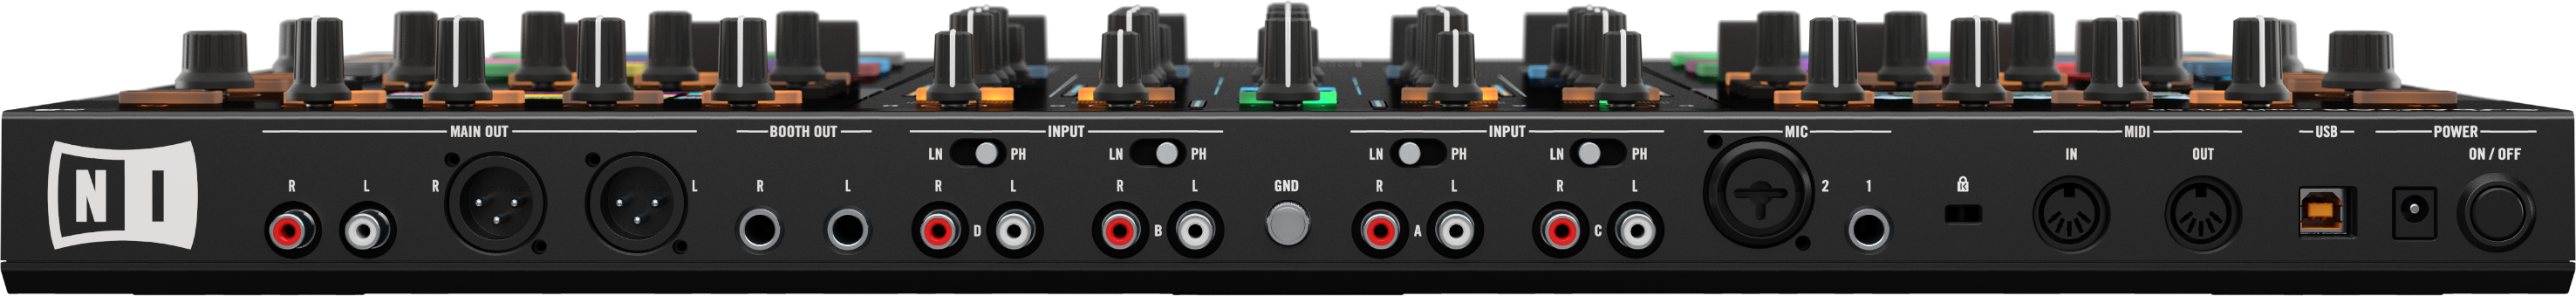 Native Instruments Traktor Kontrol S8 - Controlador DJ USB - Variation 2